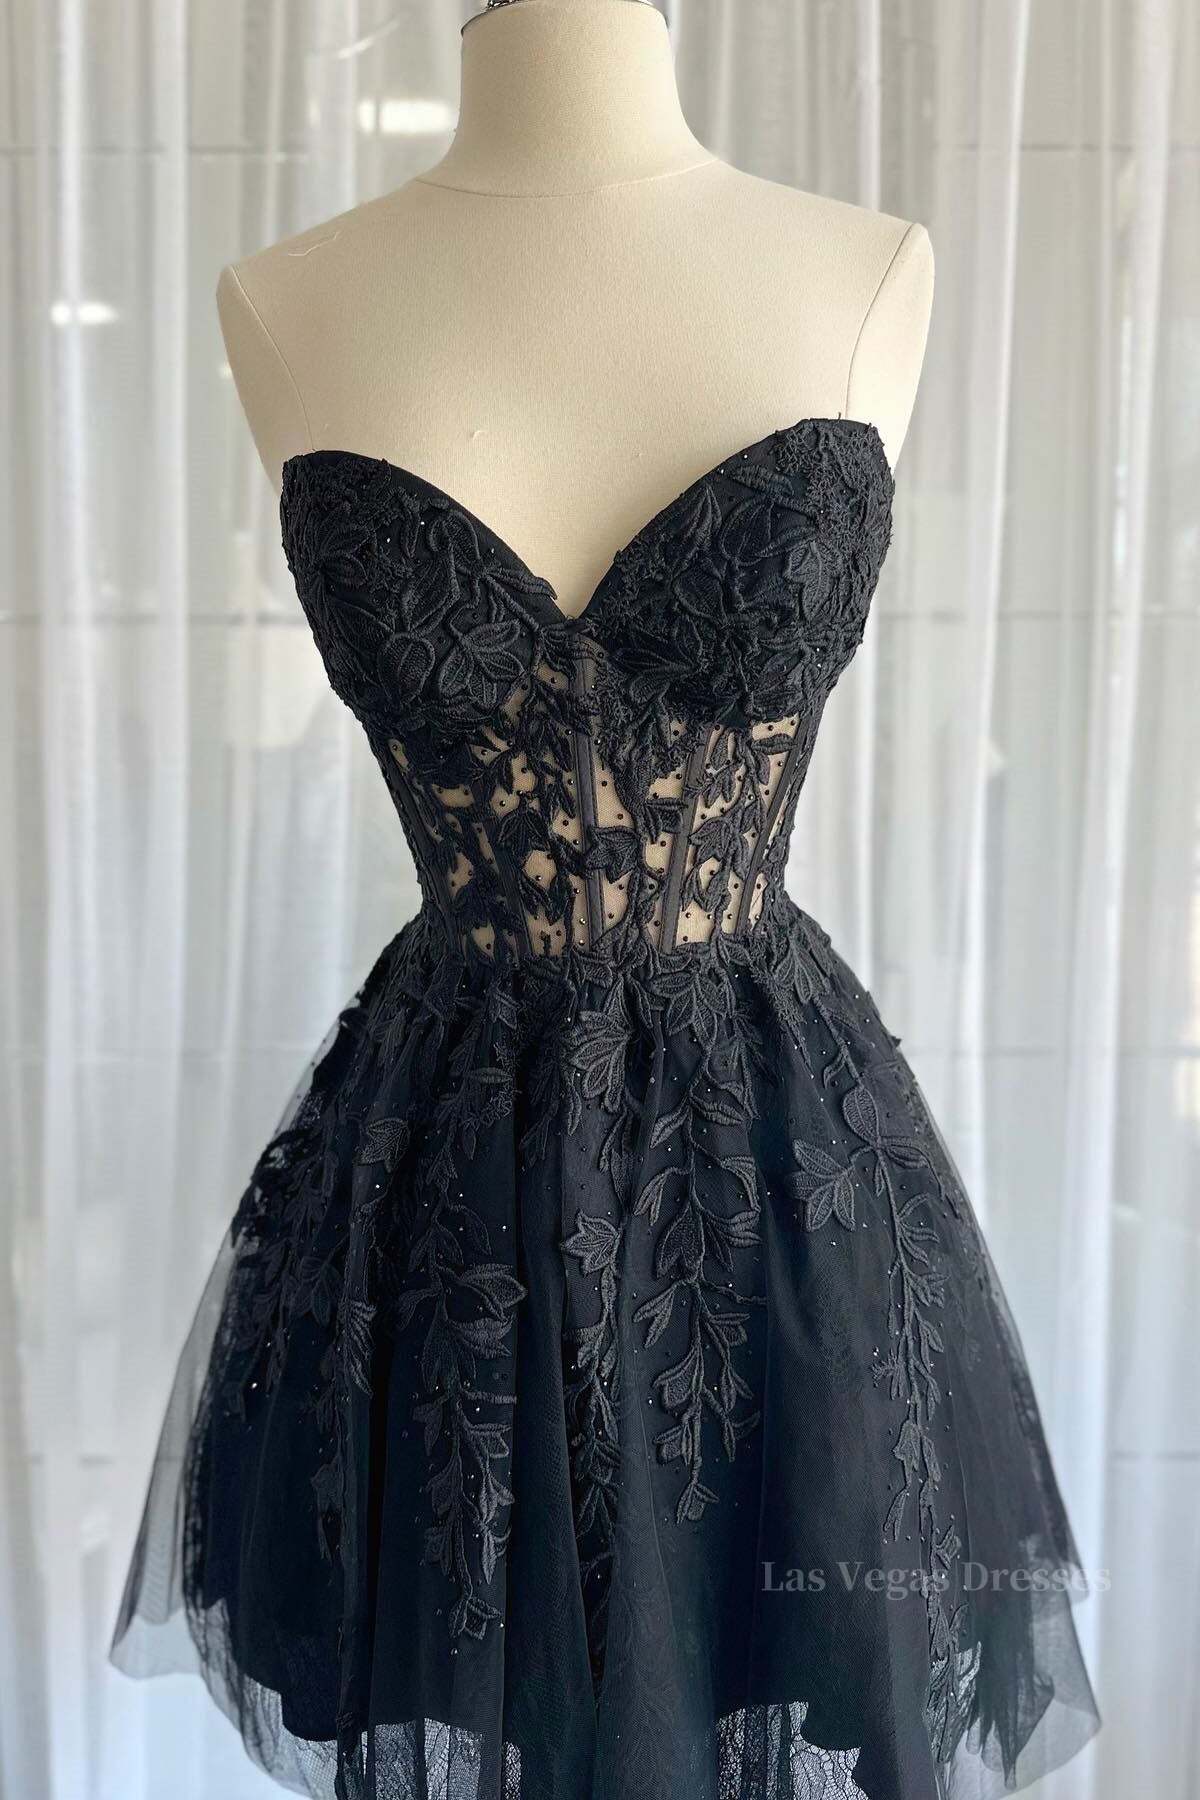 Strapless Short Black Lace Prom Dresses, Short Black Lace Formal Homecoming Dresses